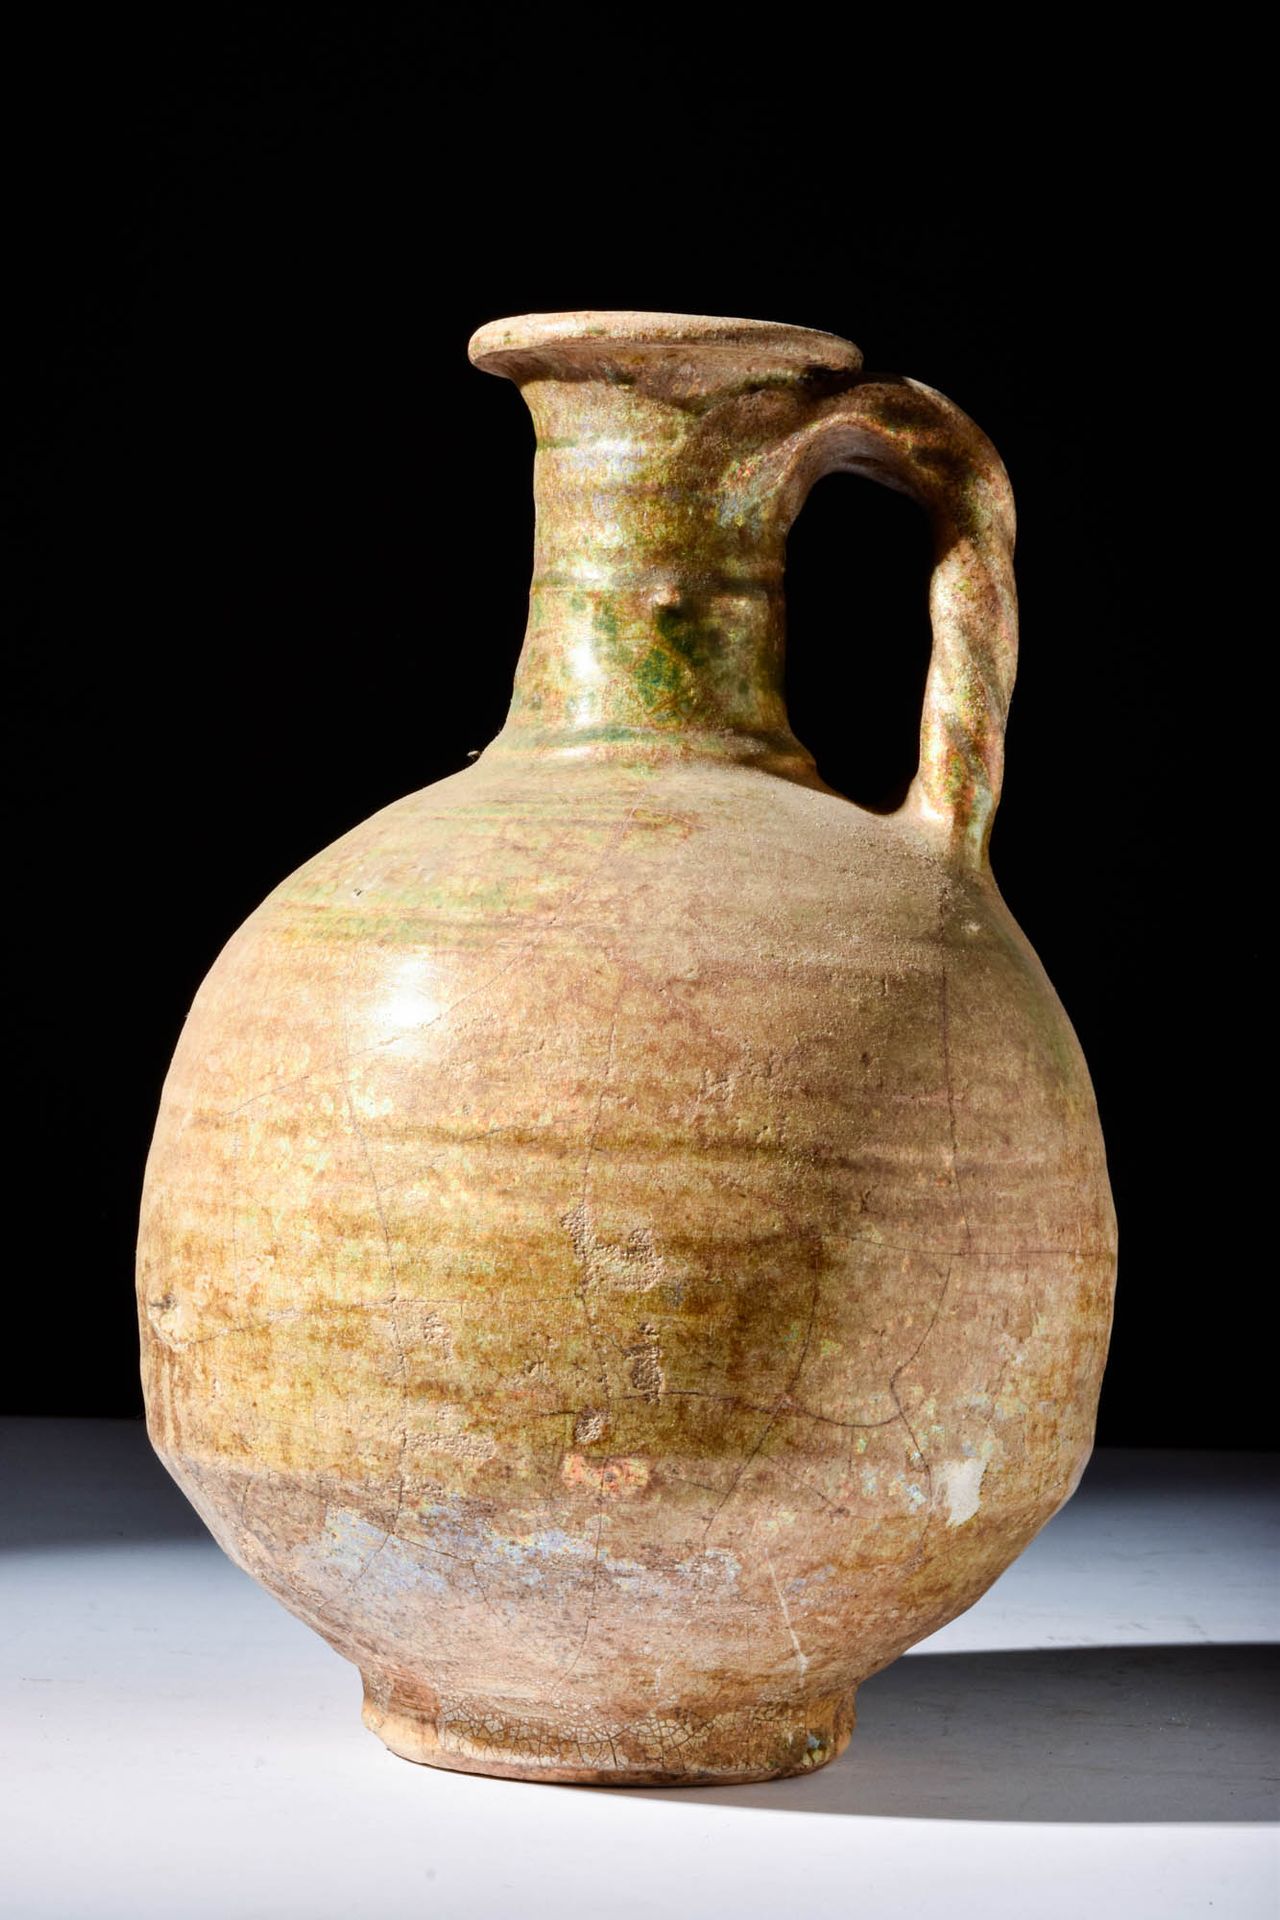 LATE ROMAN LEAD GLAZED BOTTLE Ca. 200 - 400 D.C.
Rara botella romana de terracot&hellip;